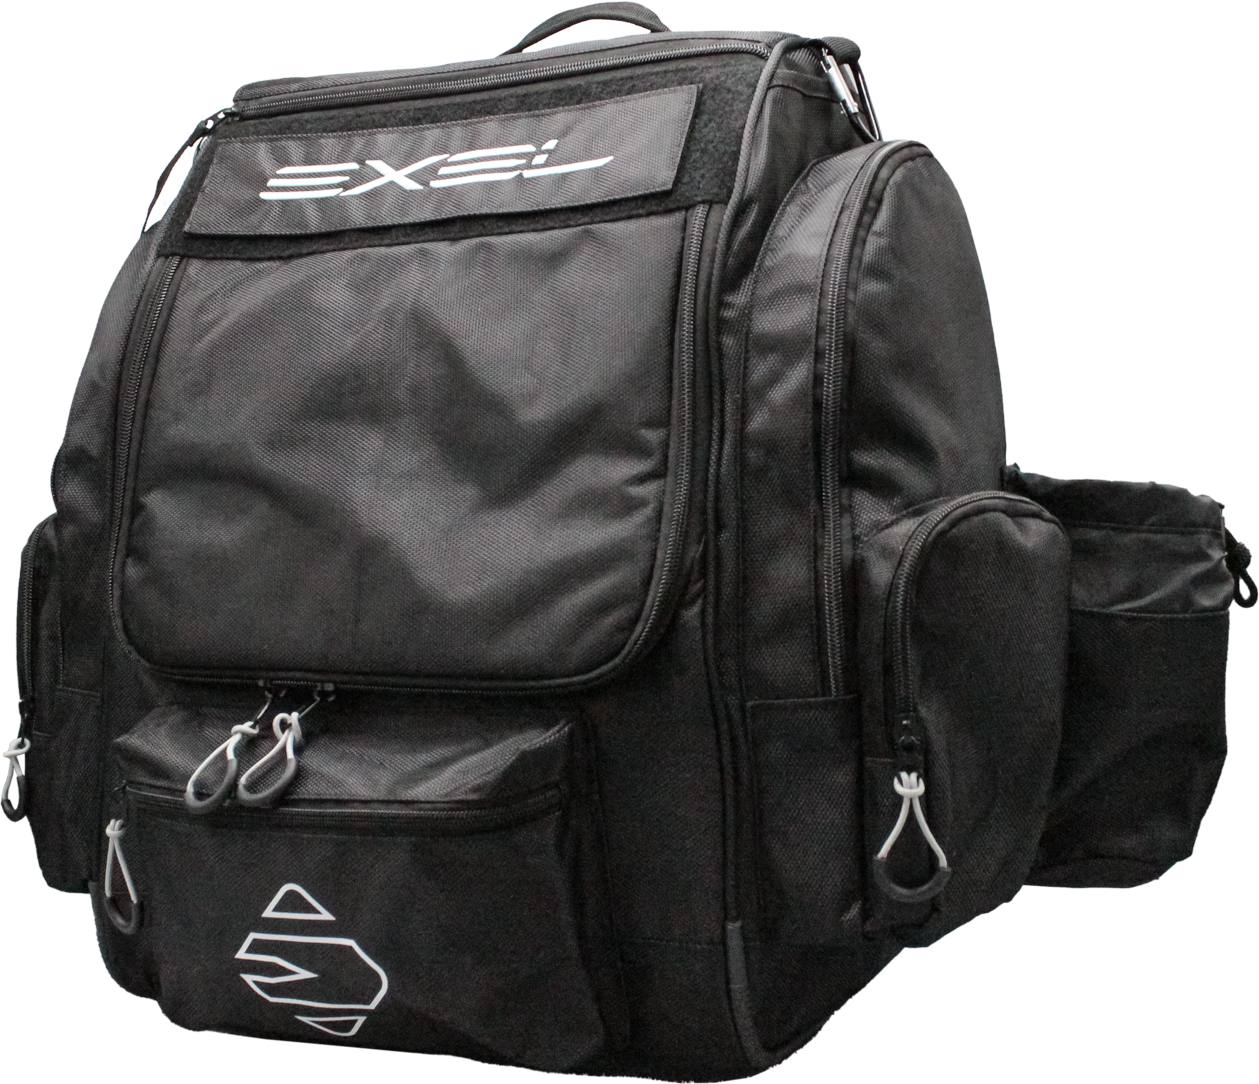 Exel E3 bag Black